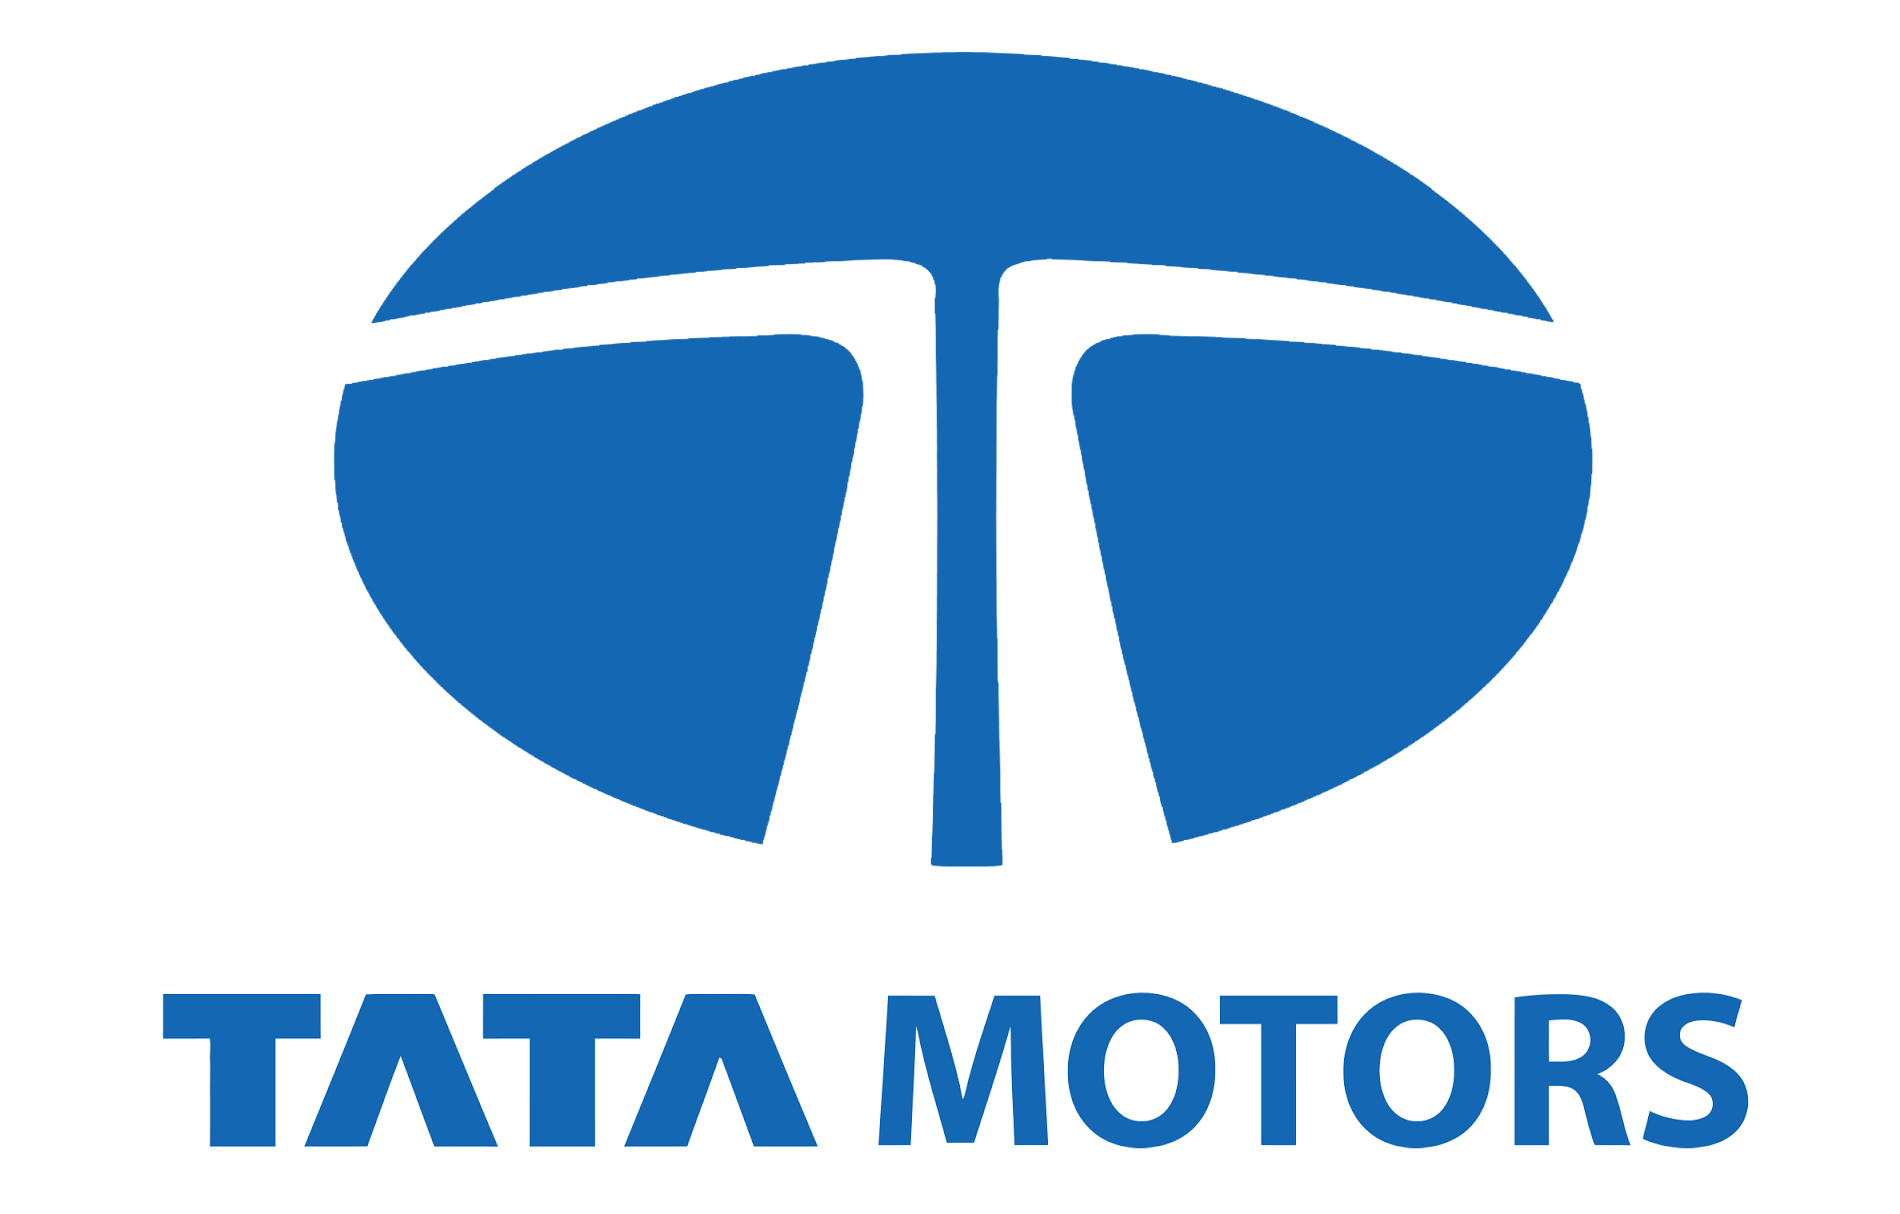 Tata Motors Cars Showroom - Tech Wheels|Show Room|Automotive